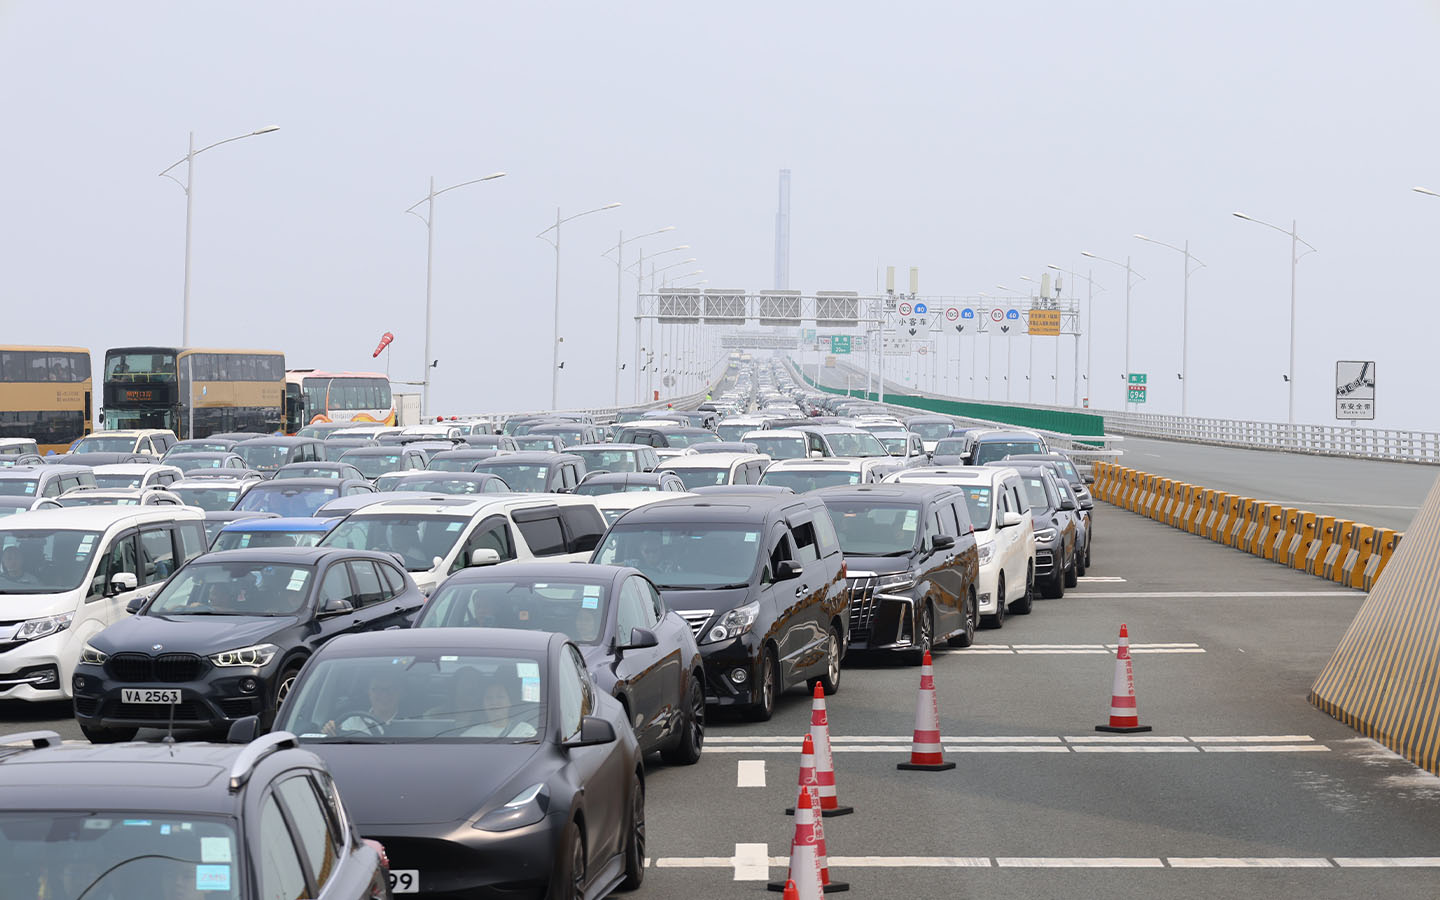 Over 10 million vehicles have used the Hong Kong-Zhuhai-Macao Bridge 